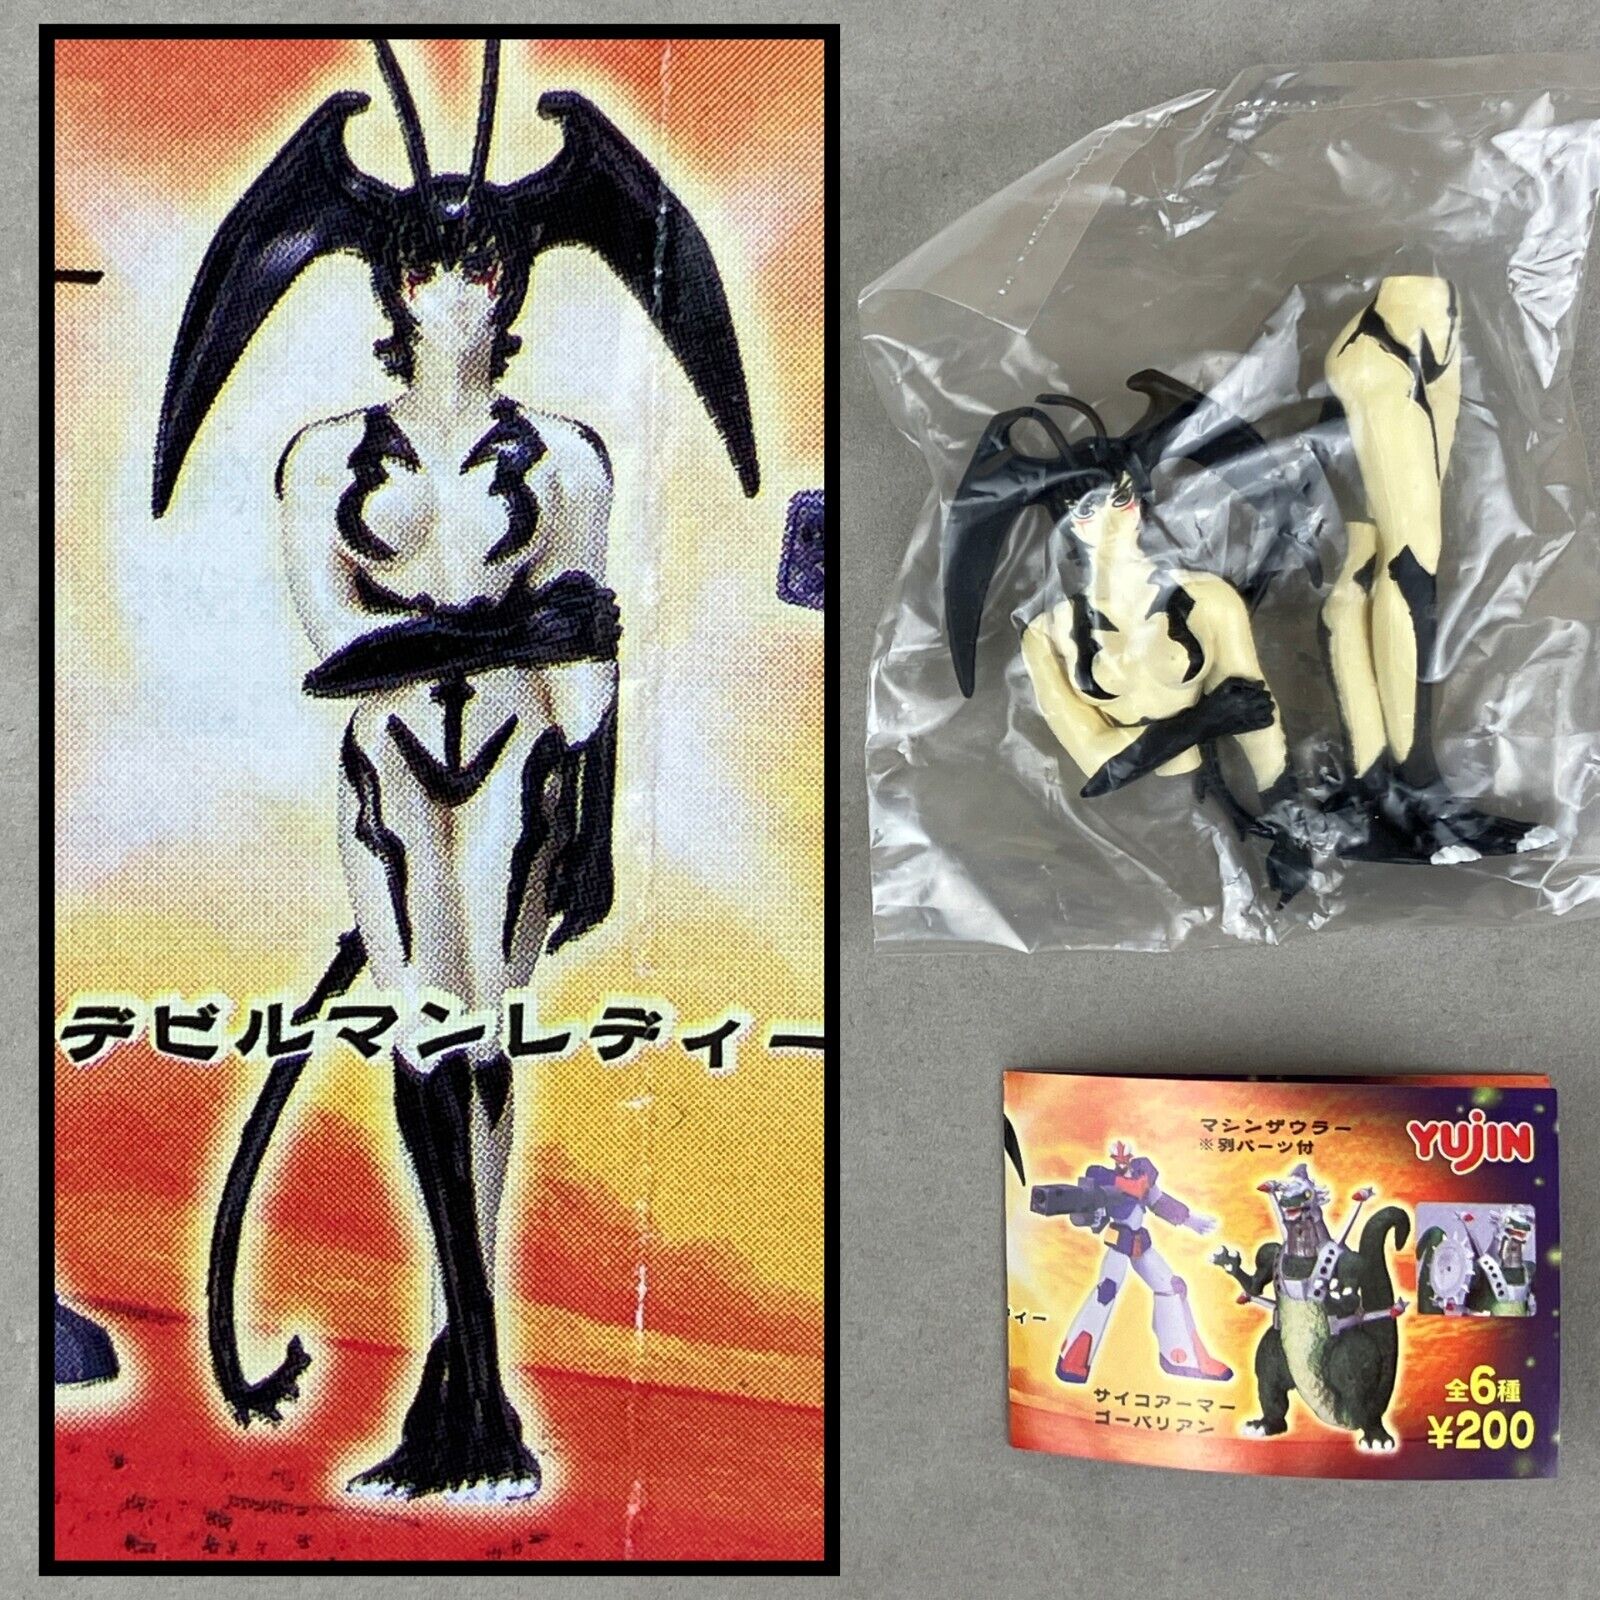 Yujin Devilman Lady SR Super Real Robo Museum Anime Figure Japan Import